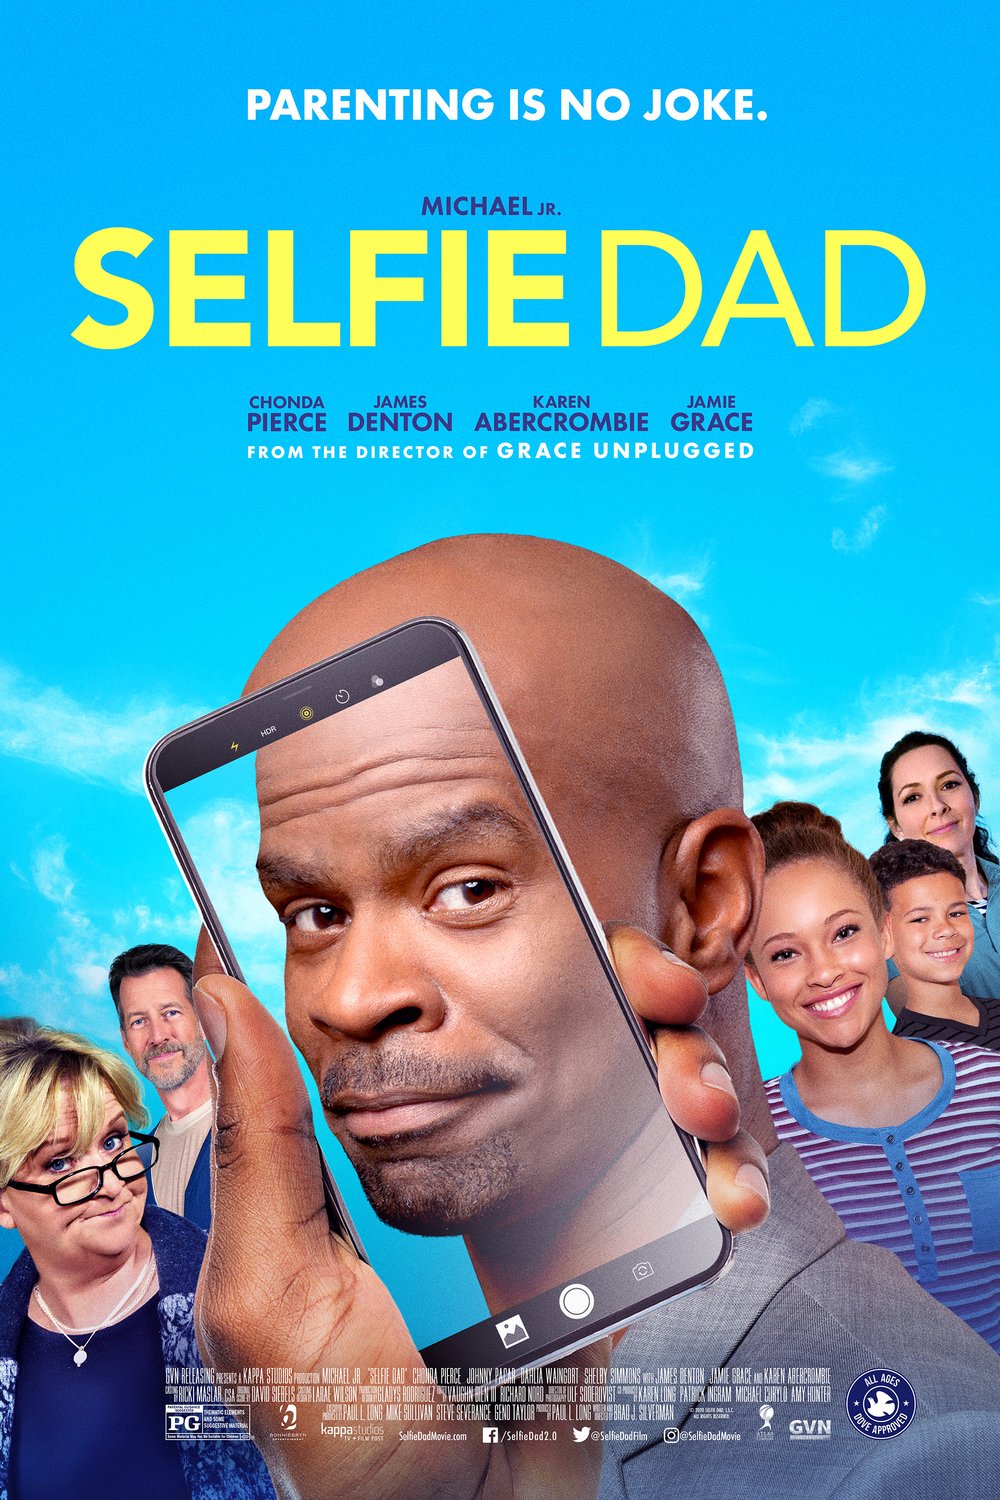 L'affiche du film Selfie Dad